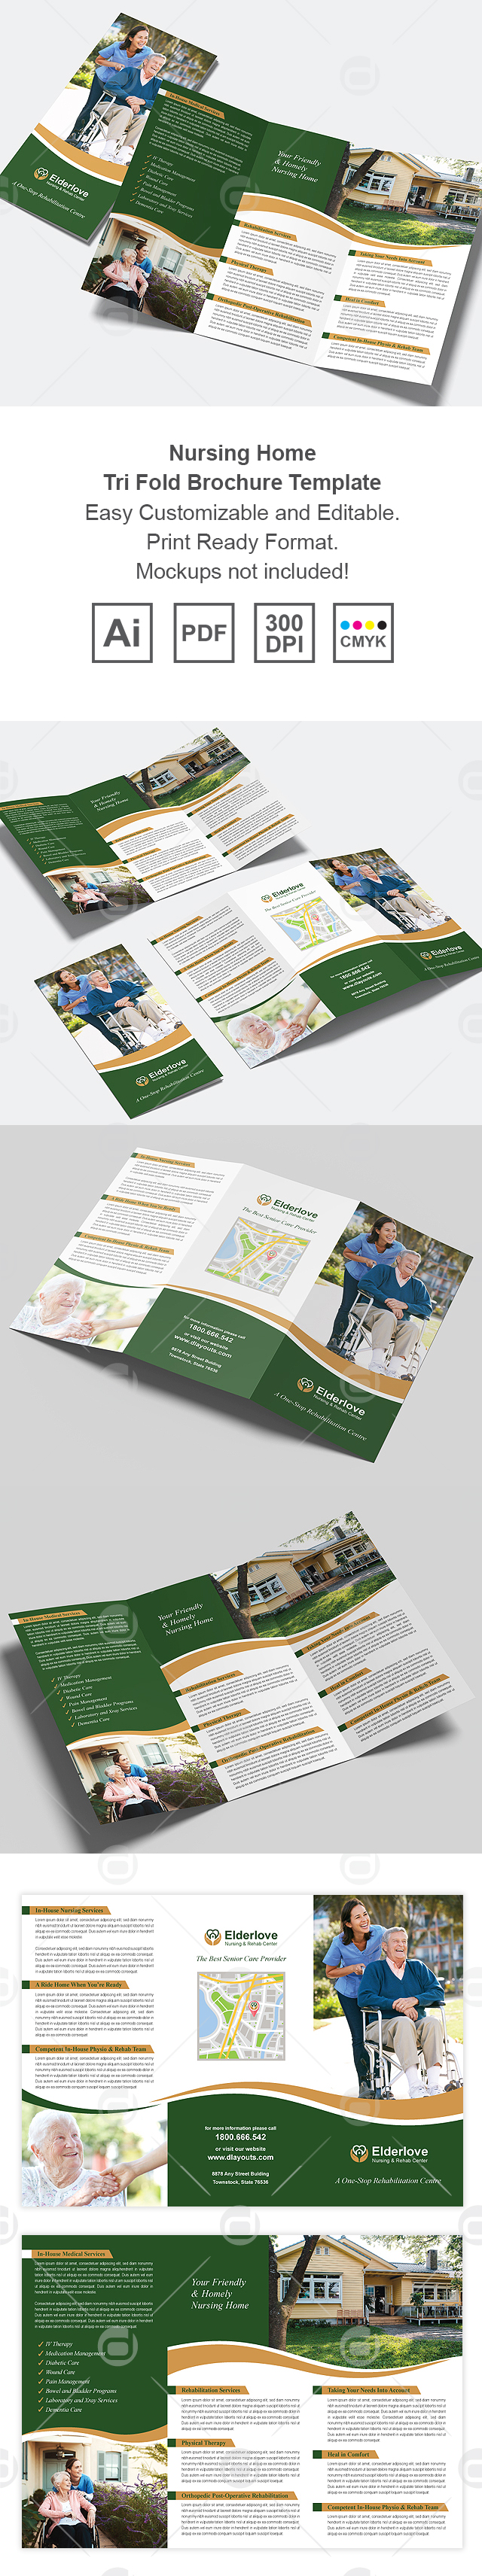 Nursing Home Tri Fold Brochure Template